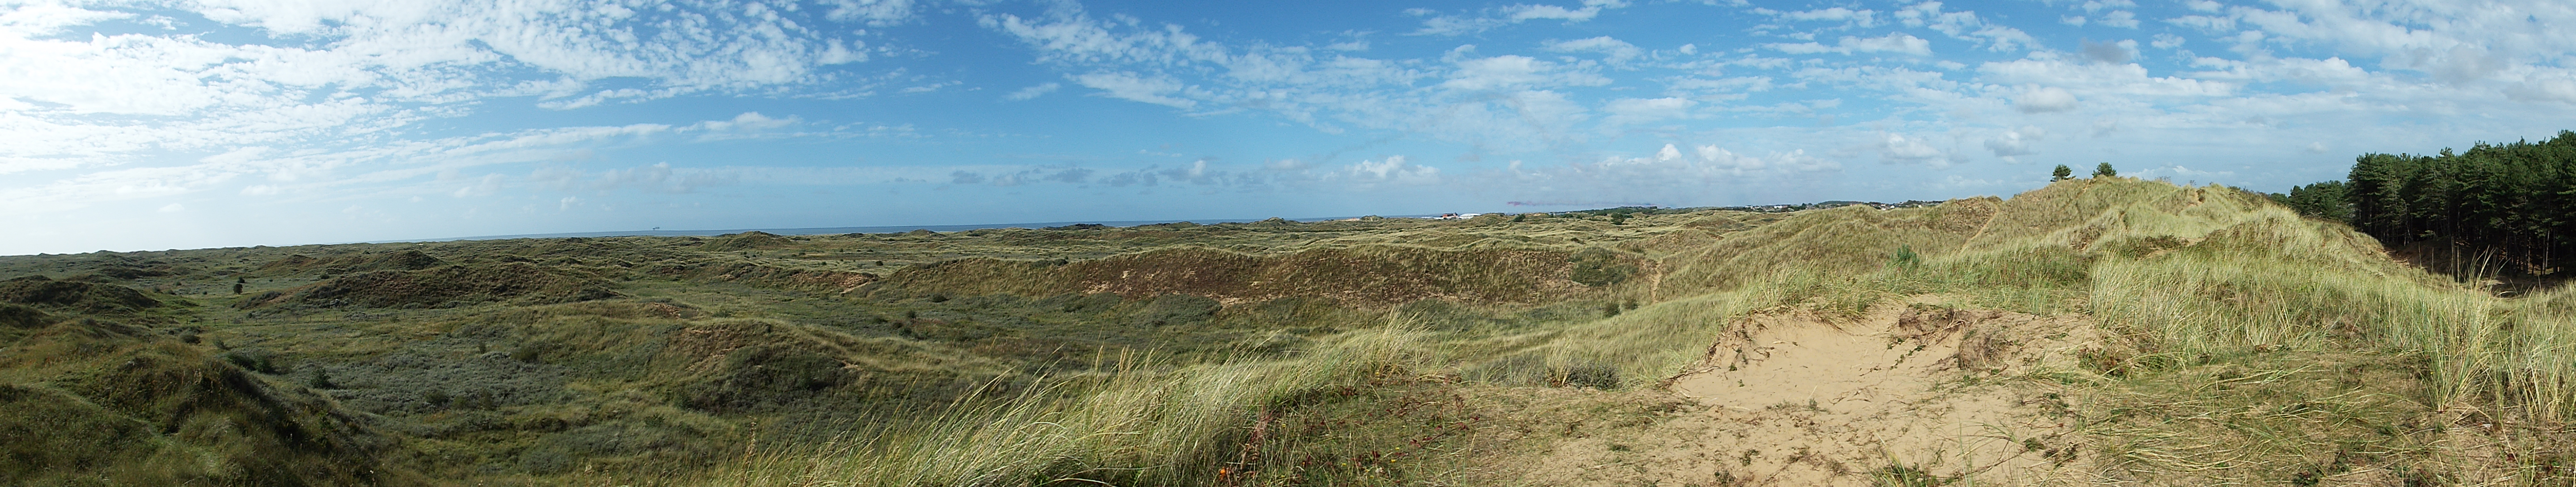 Panorama of sand dunes near Windy Gap